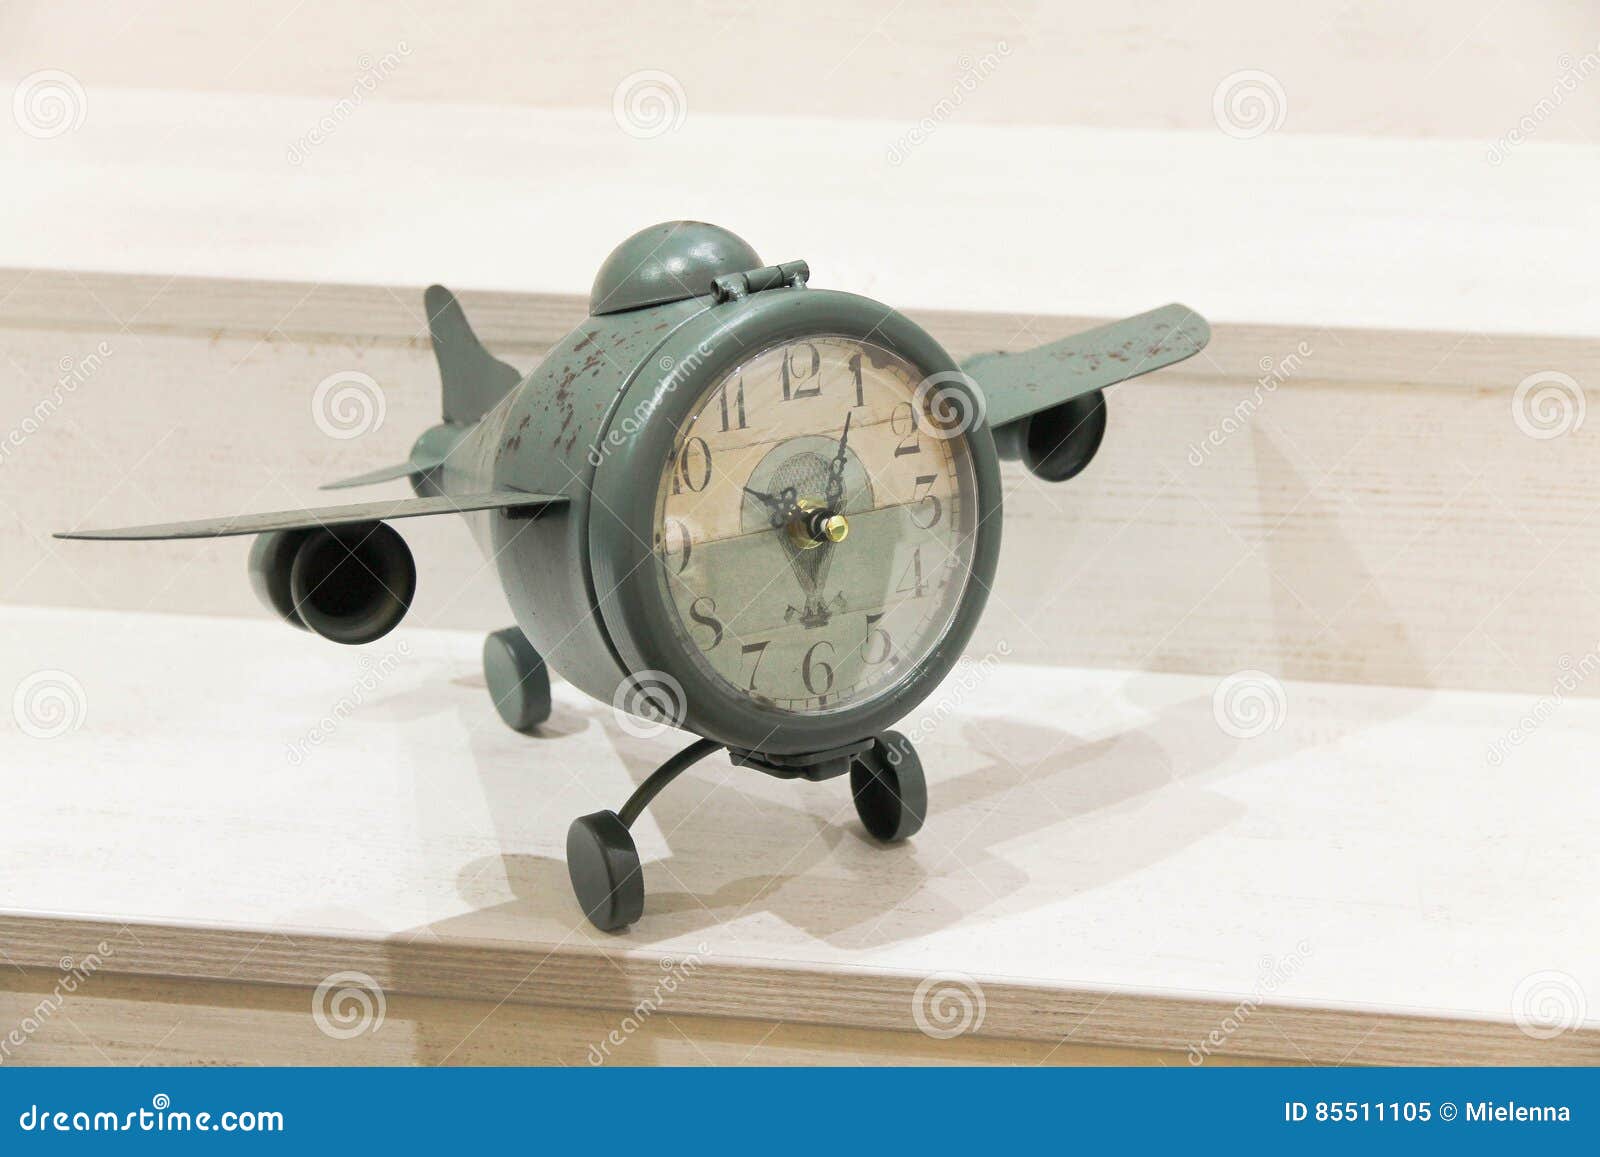 vintage clock-aircraft. concept: time flies